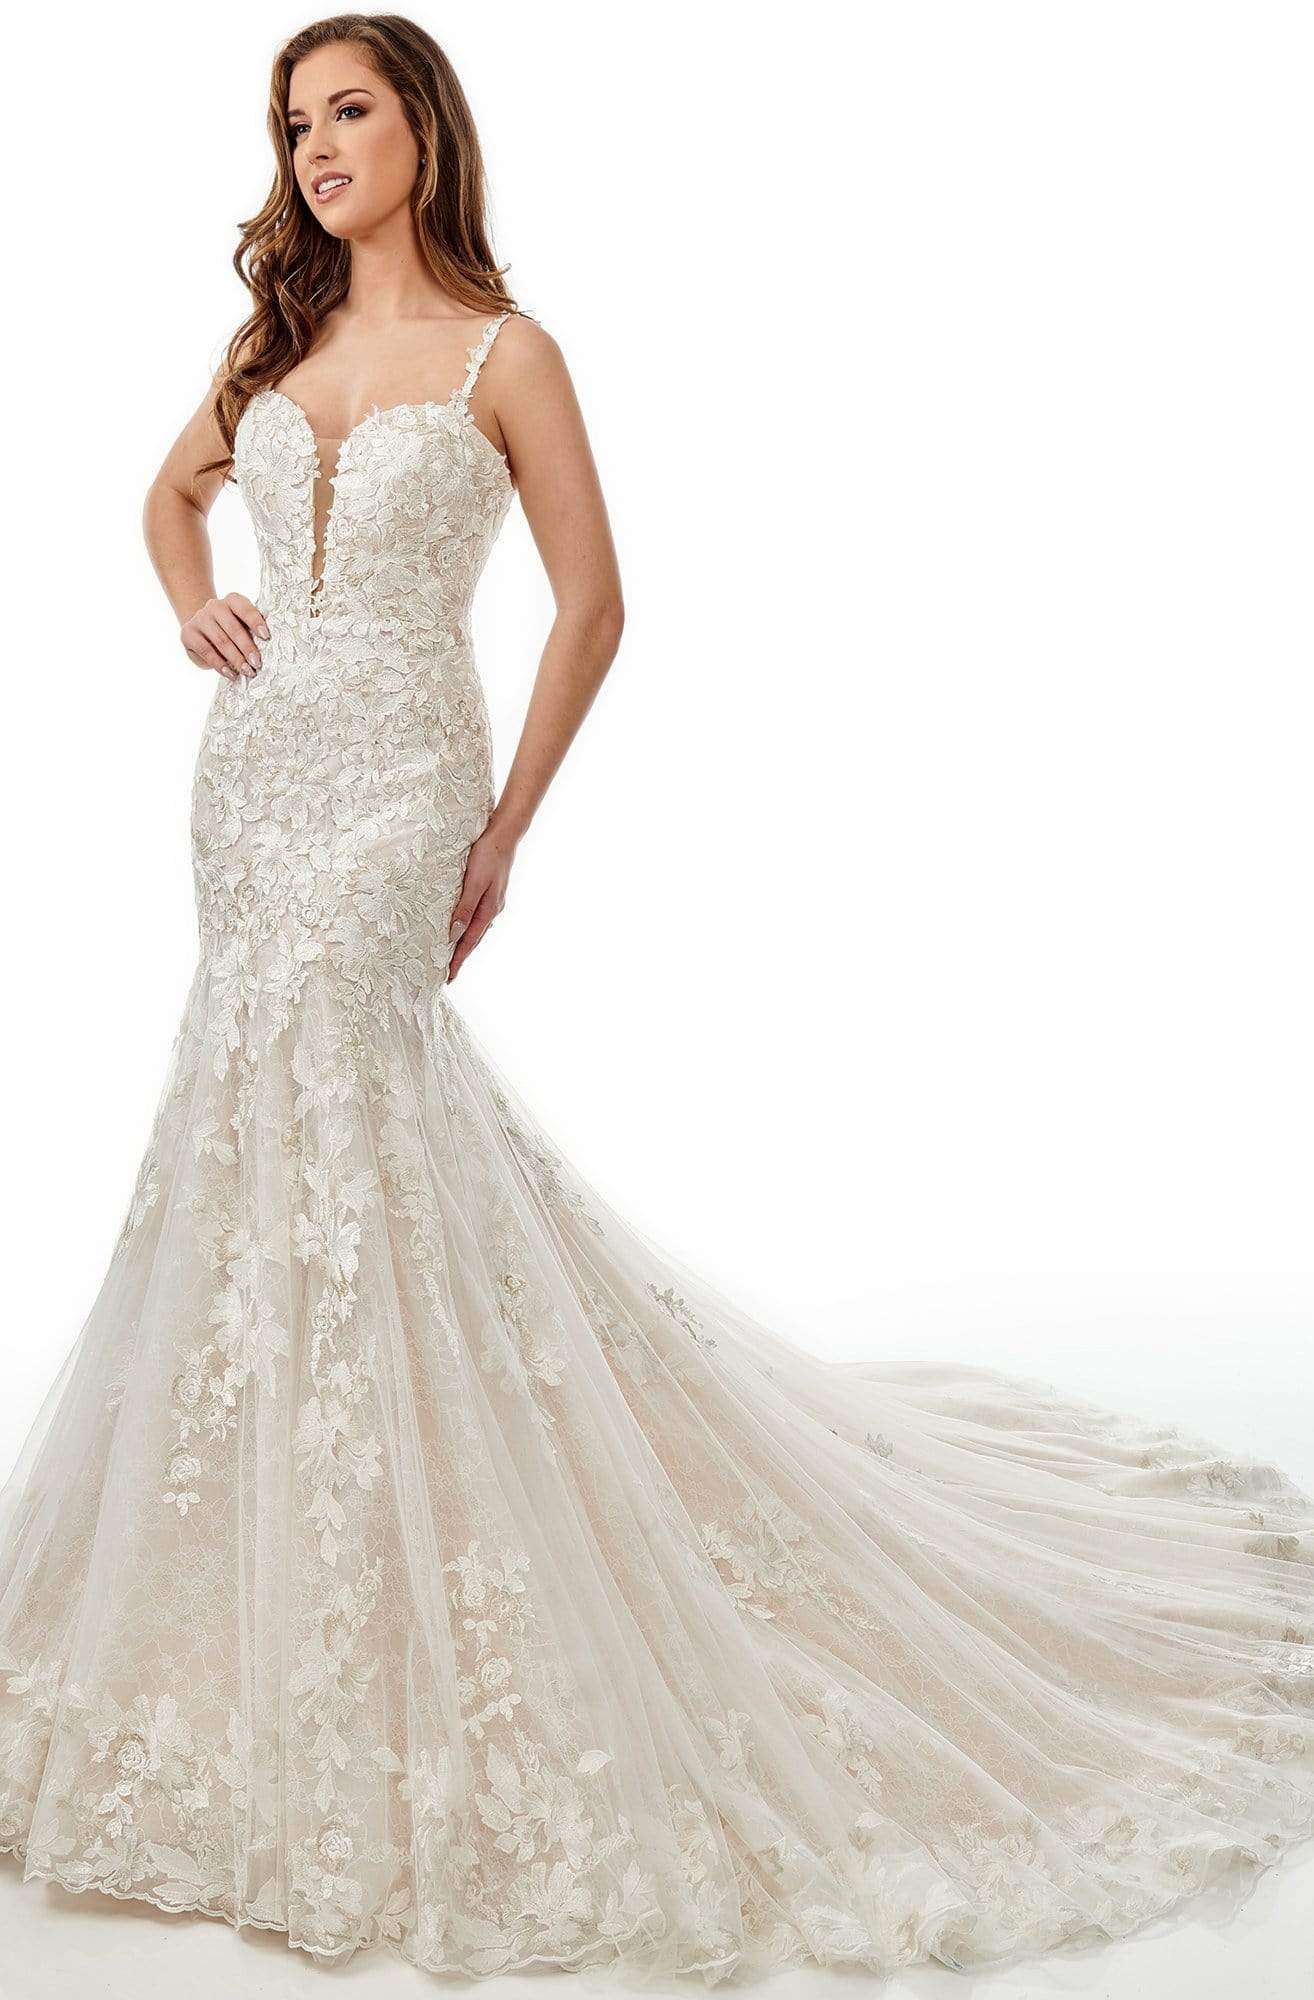 Lo'Adoro Bridal By Rachel Allan - M757 Lace Applique Mermaid Gown Wedding Dresses 0 / Ivory Champagne